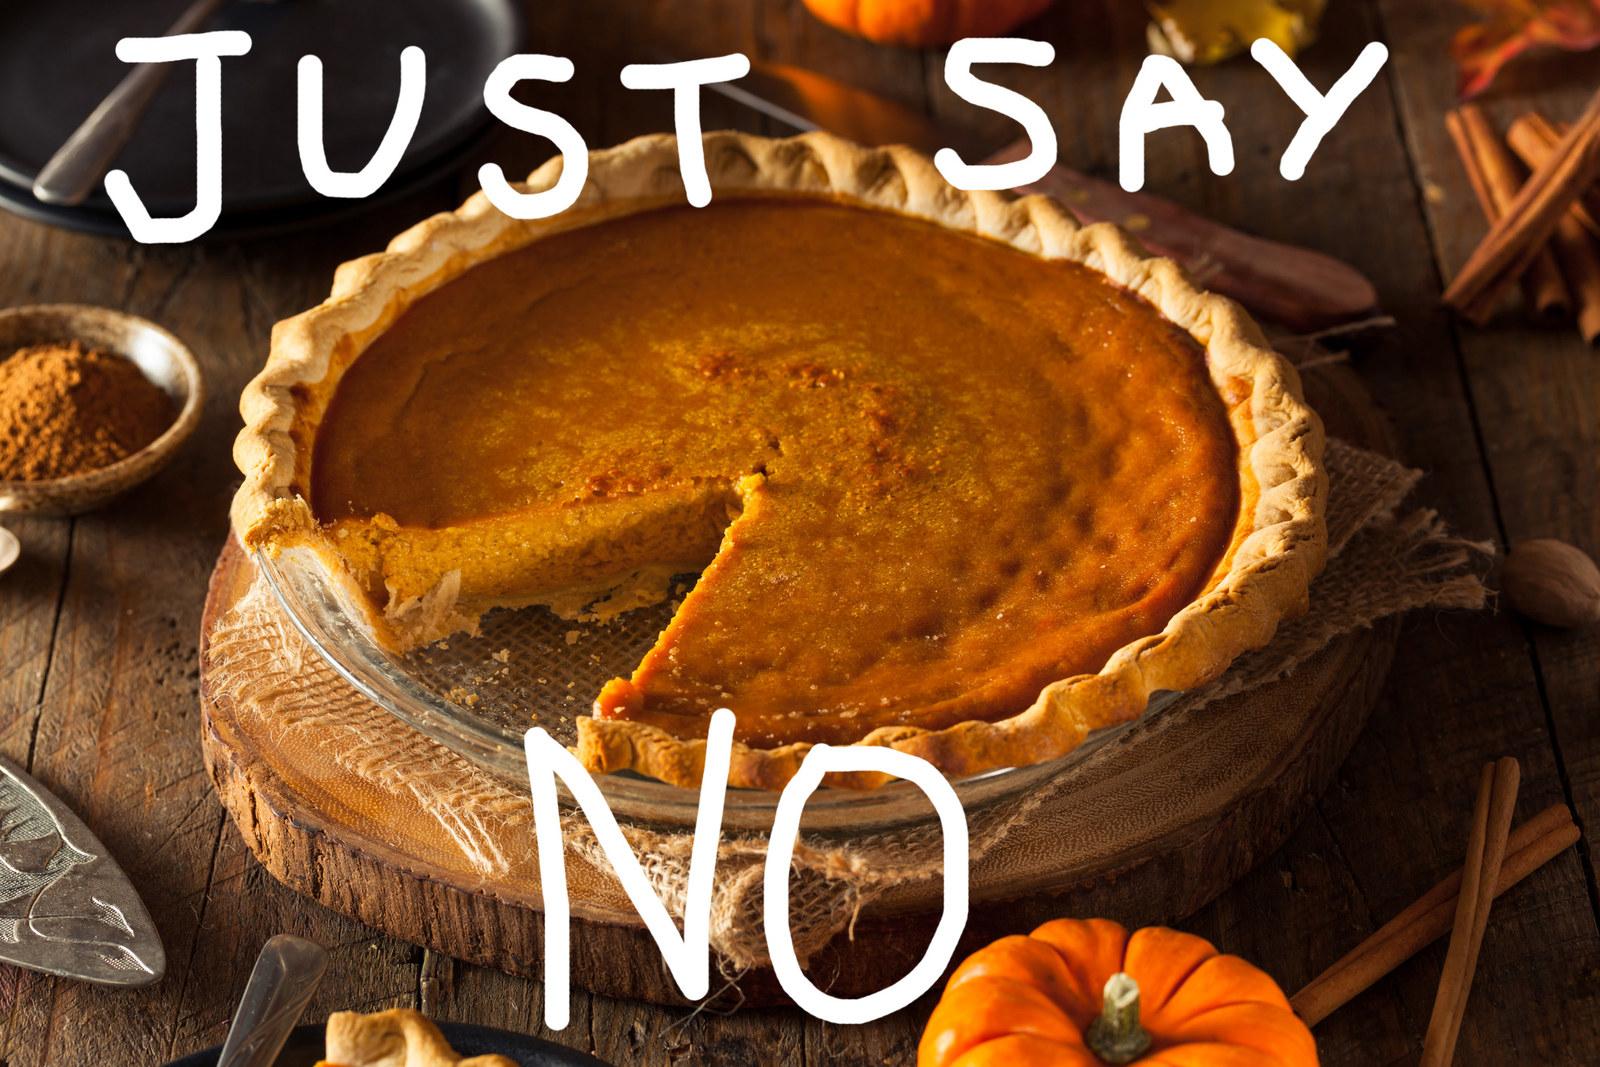 Pumpkin pie is the WORST kind of pie. 